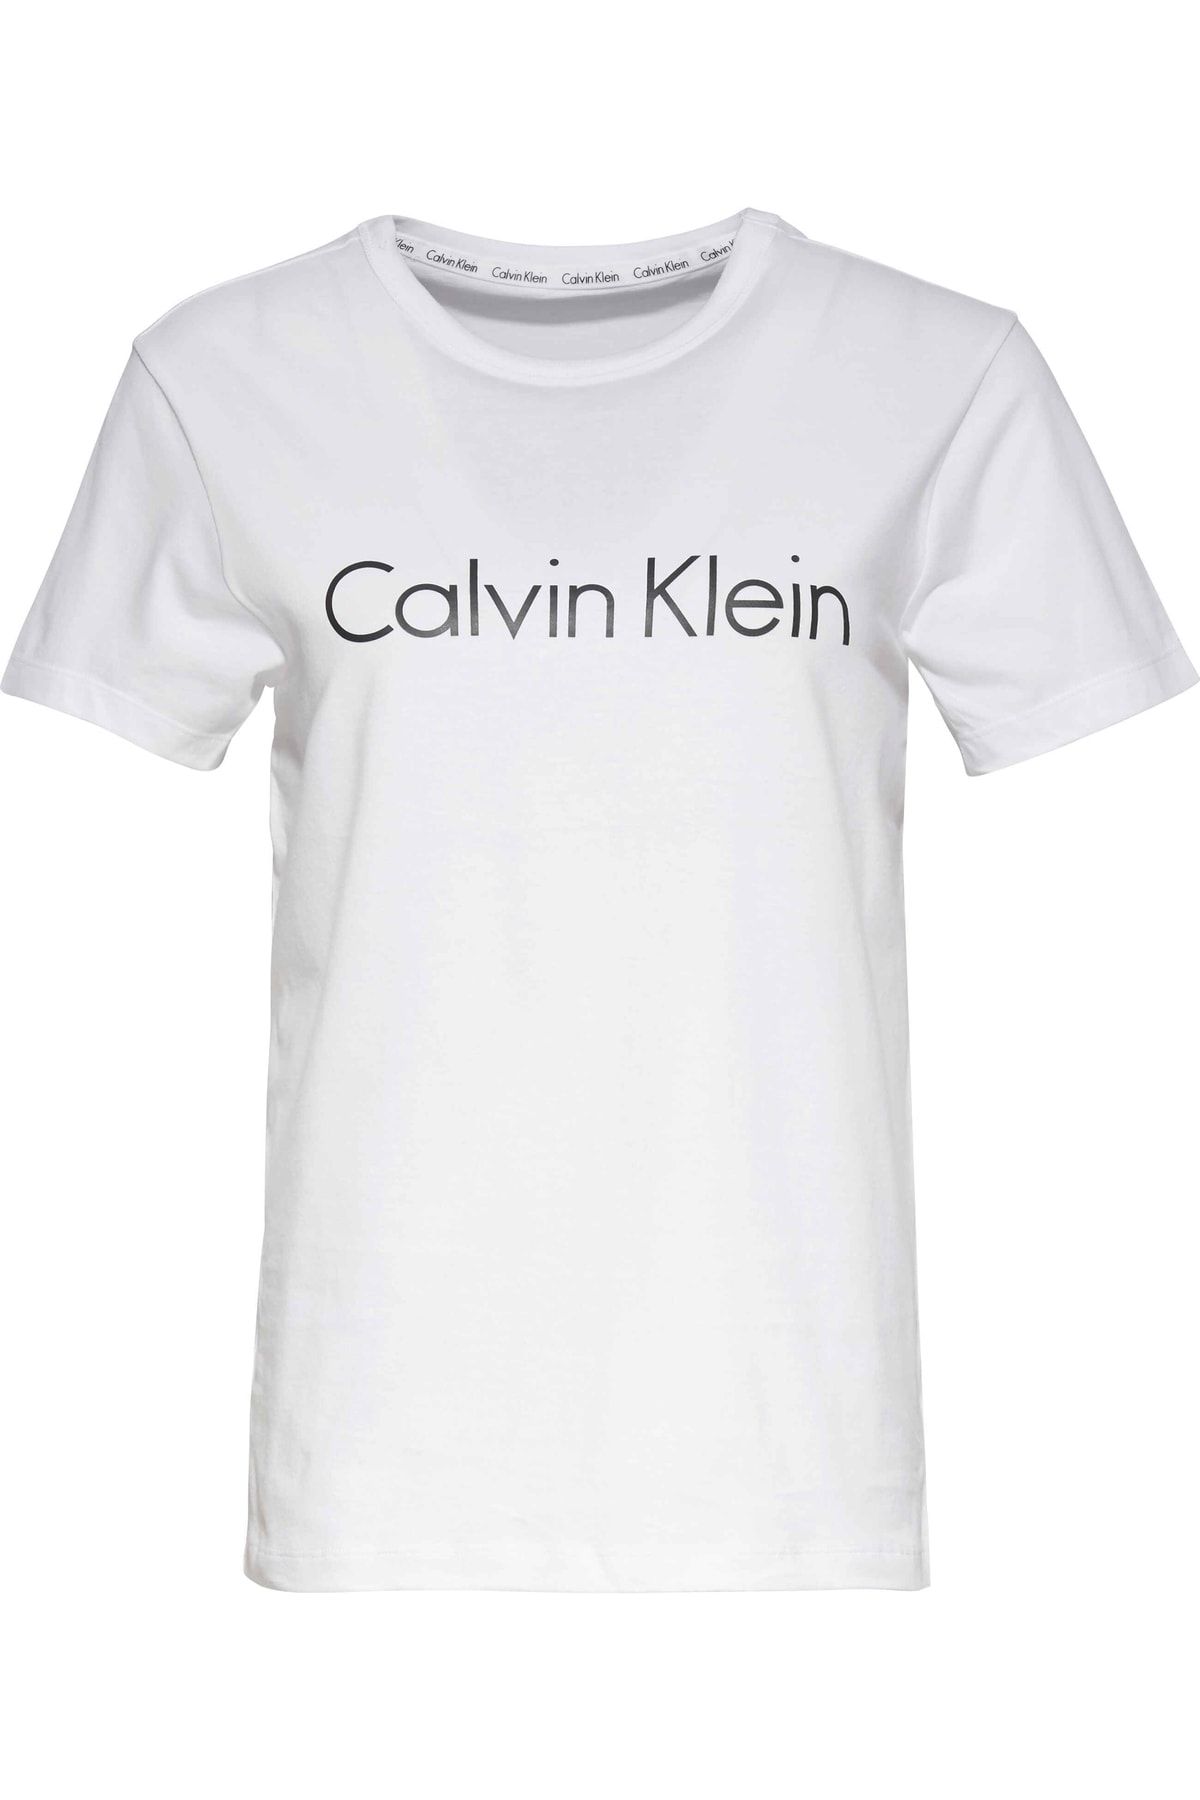 Calvin Klein T-Shirt - White - Fitted - Trendyol